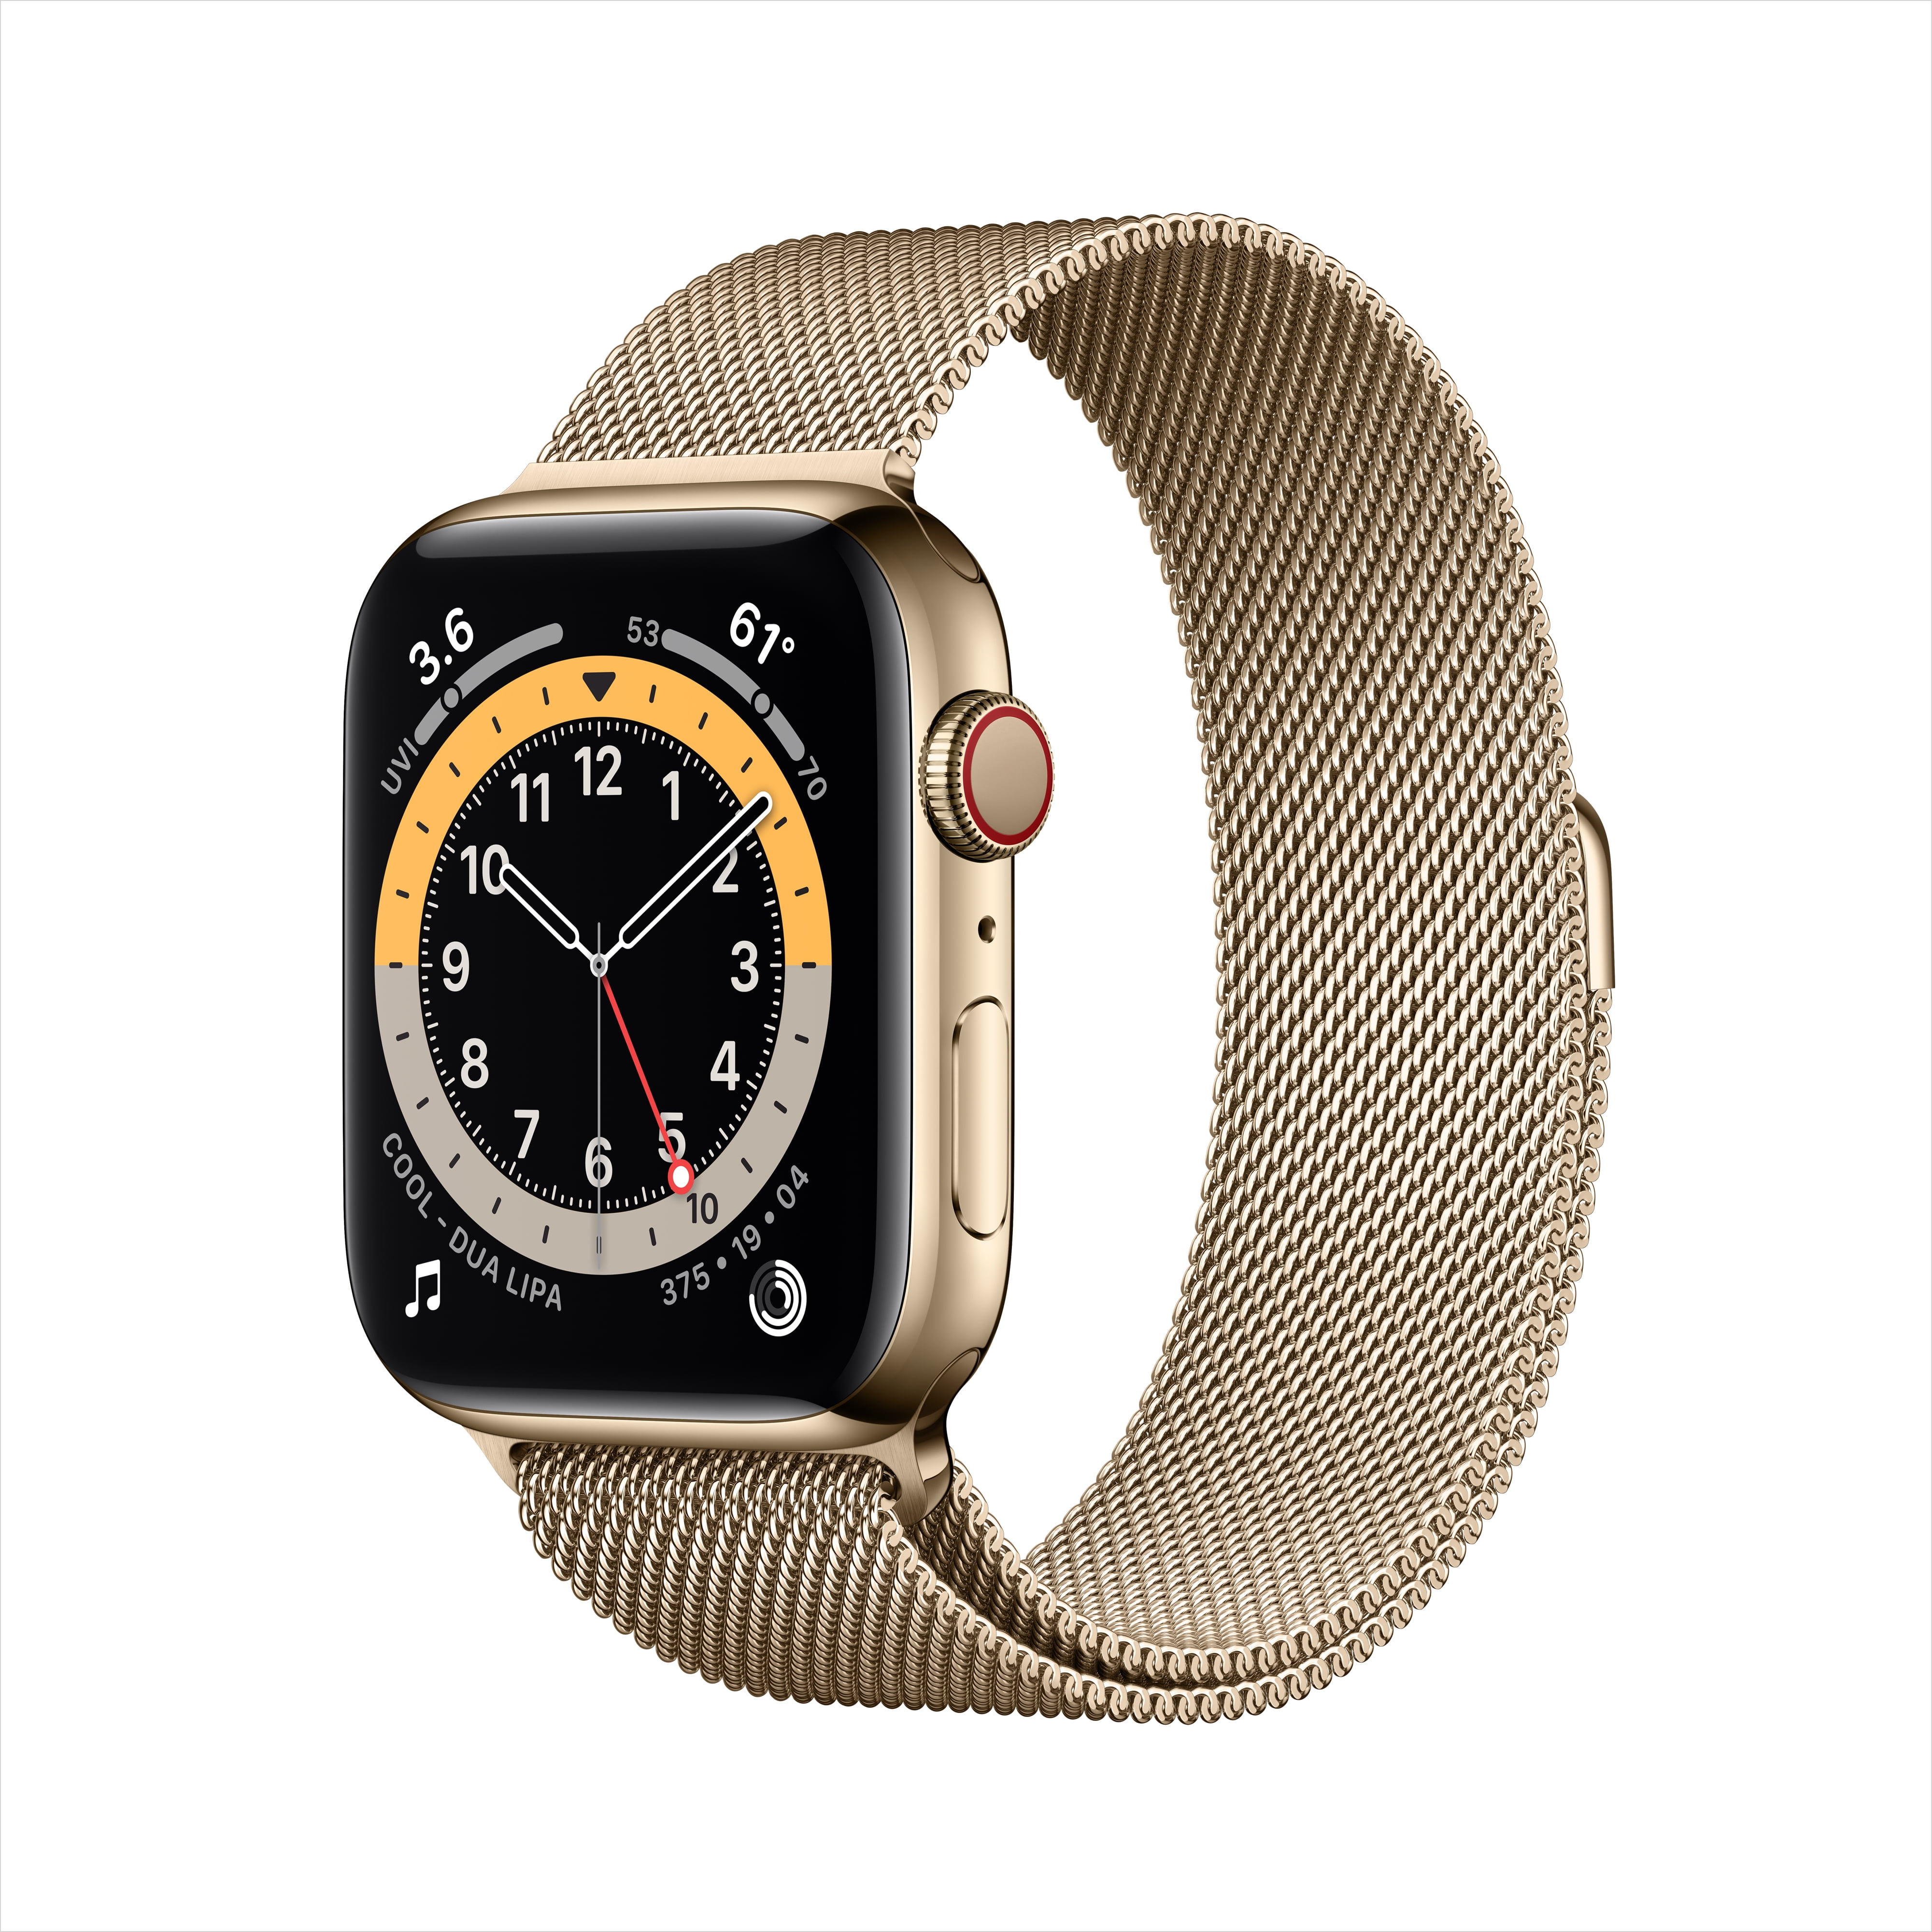 Apple Watch Series 6 GPS + Cellular, 44mm Gold Stainless Steel Case Stainless Steel Gold Apple Watch